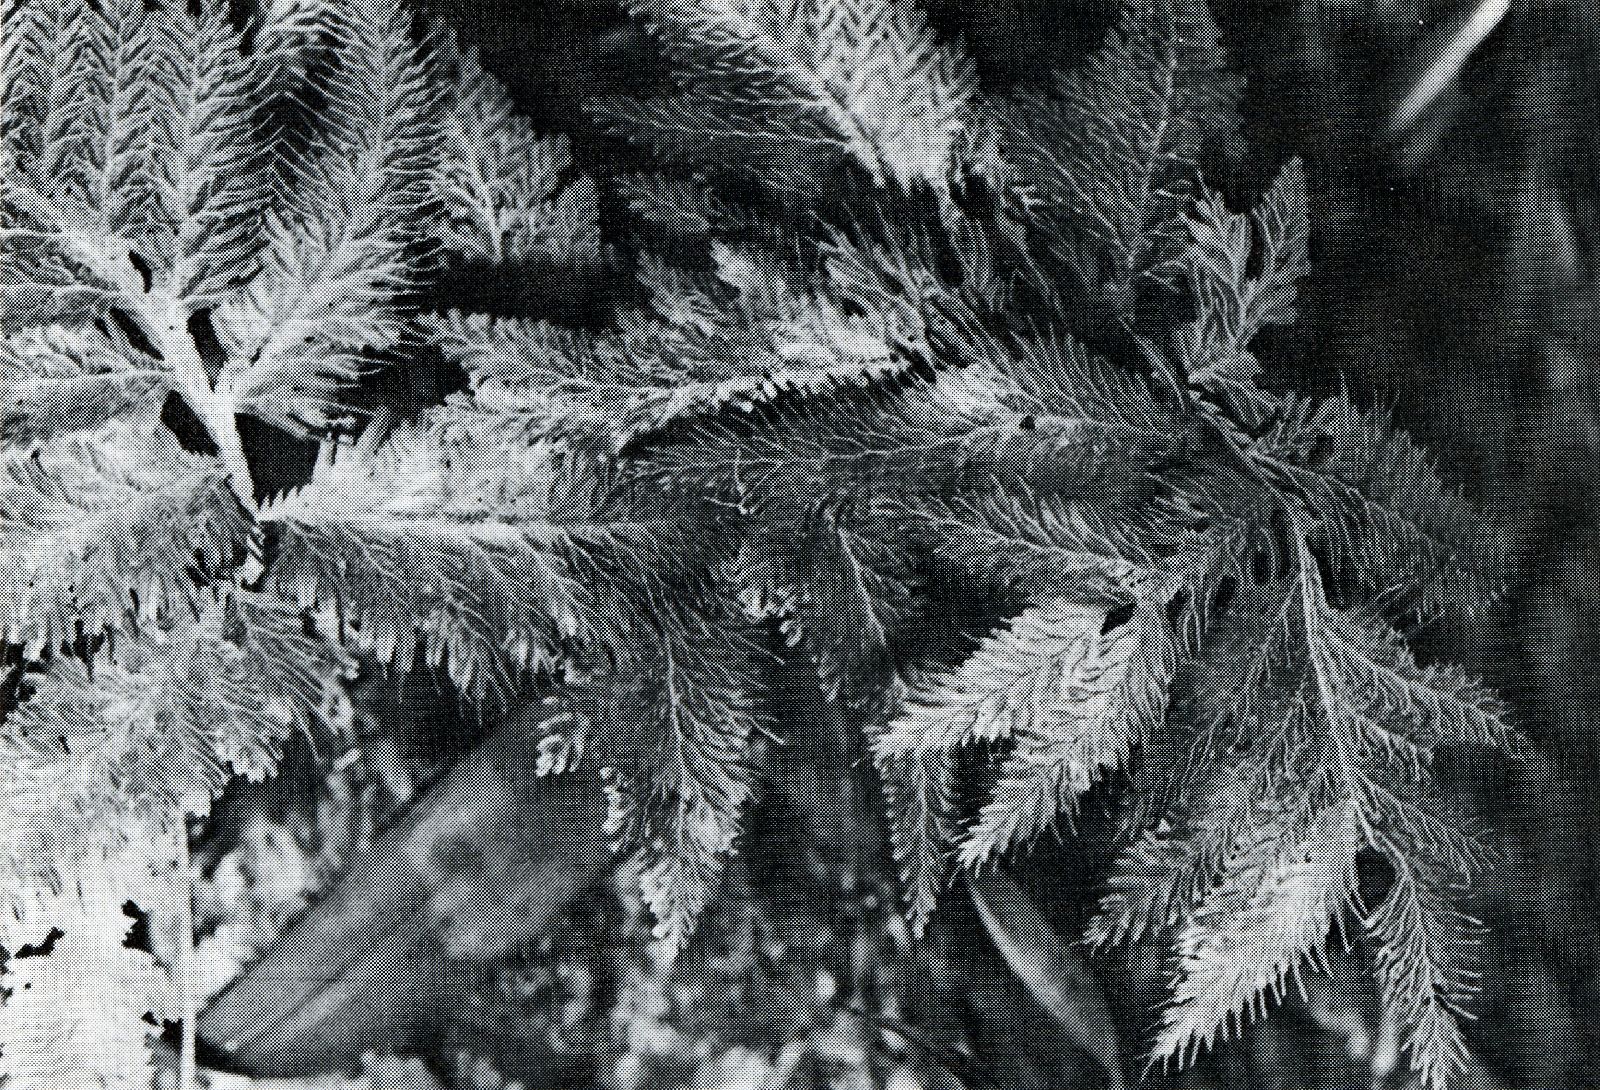 Selaginella haematodes image